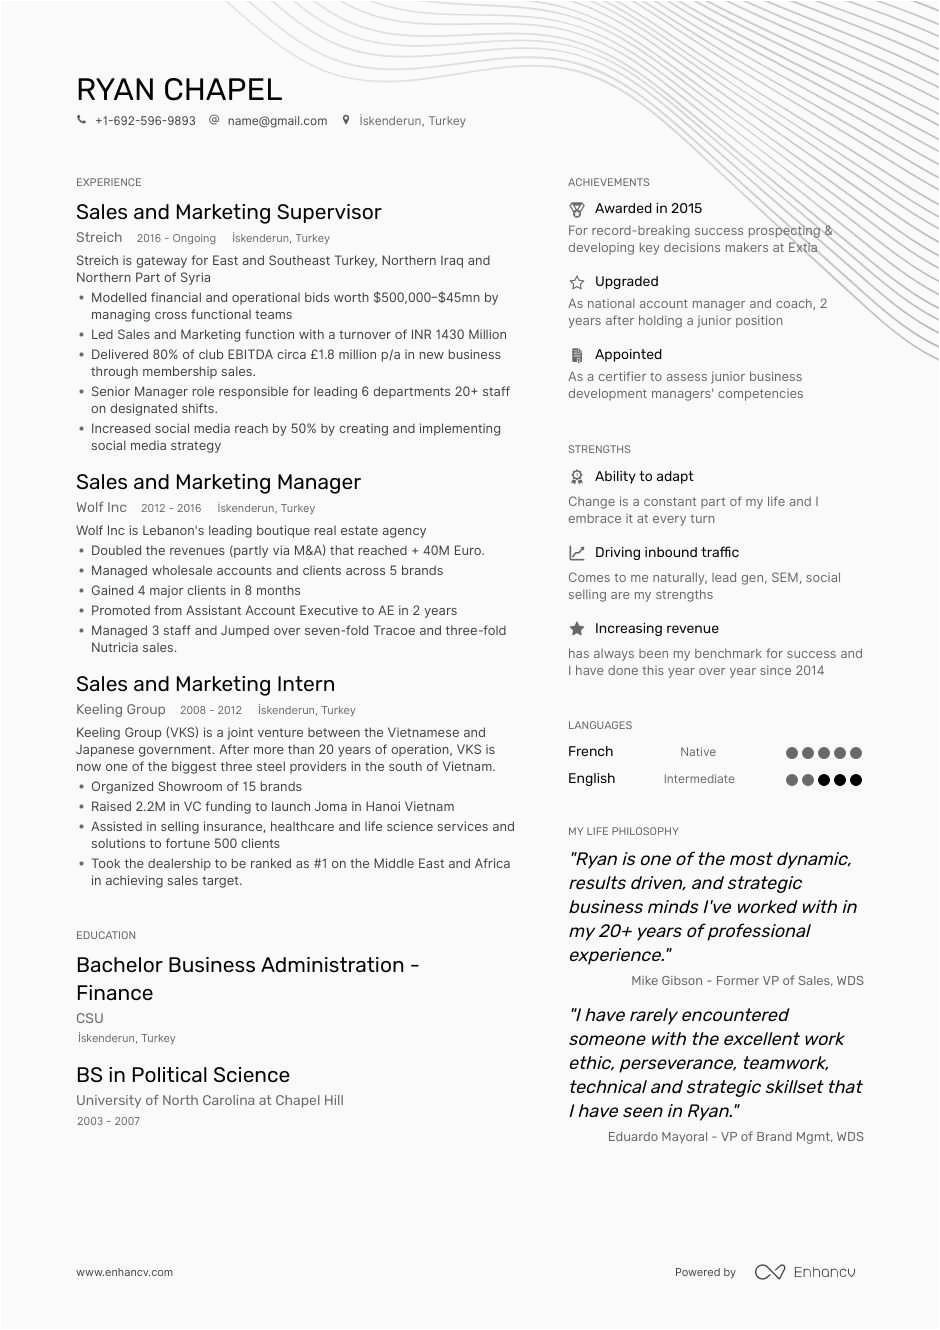 Sample Resume for Sales and Marketing Job Job Winning Sales and Marketing Professional Resume